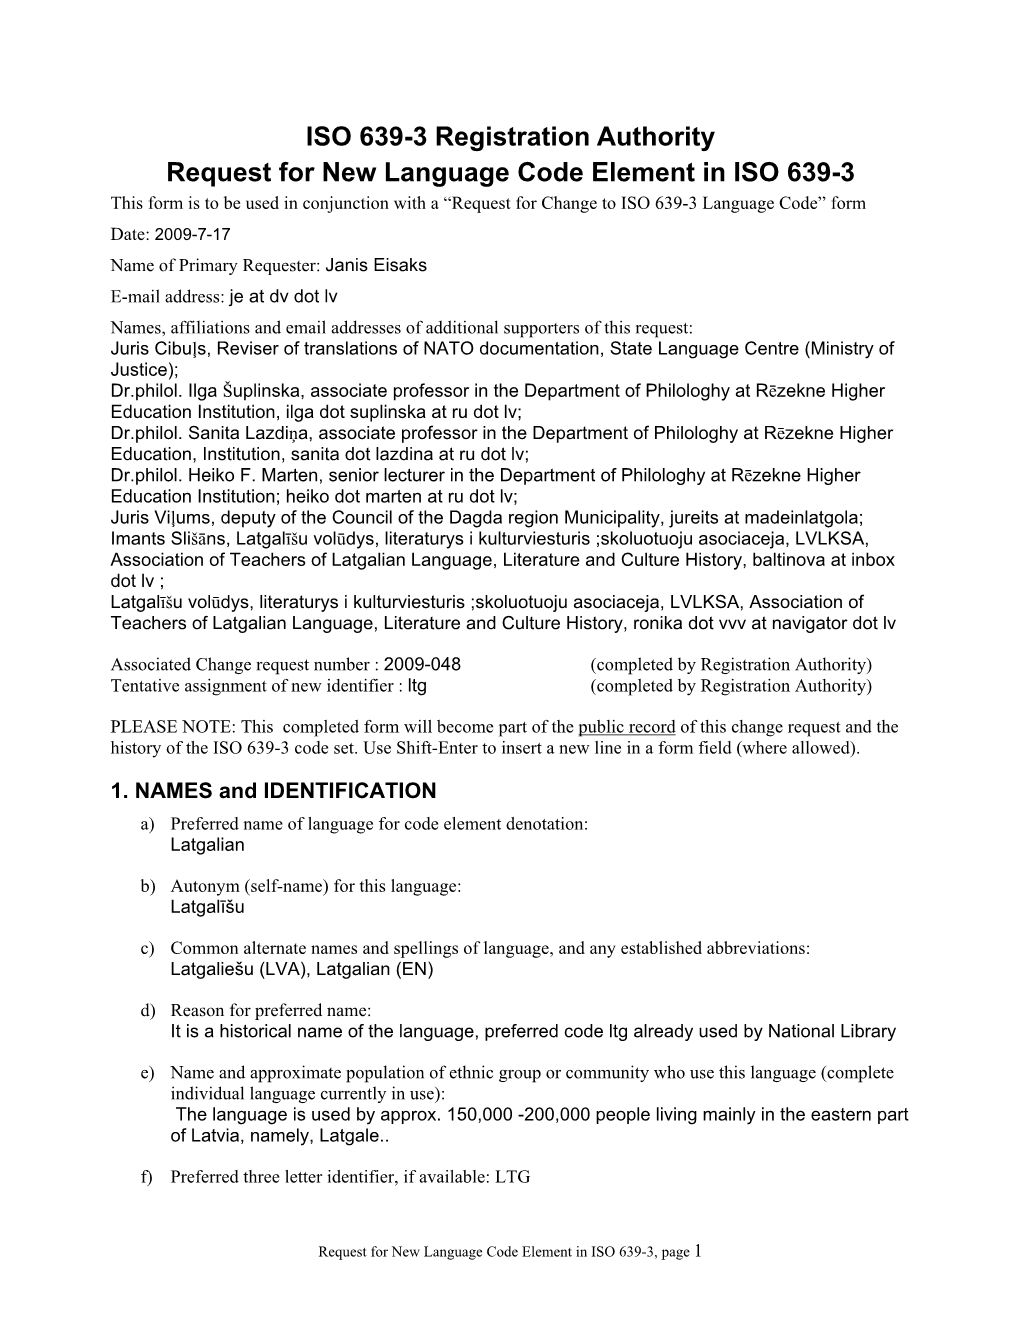 ISO 639-3 New Code Element Request 2009-048 Ltg